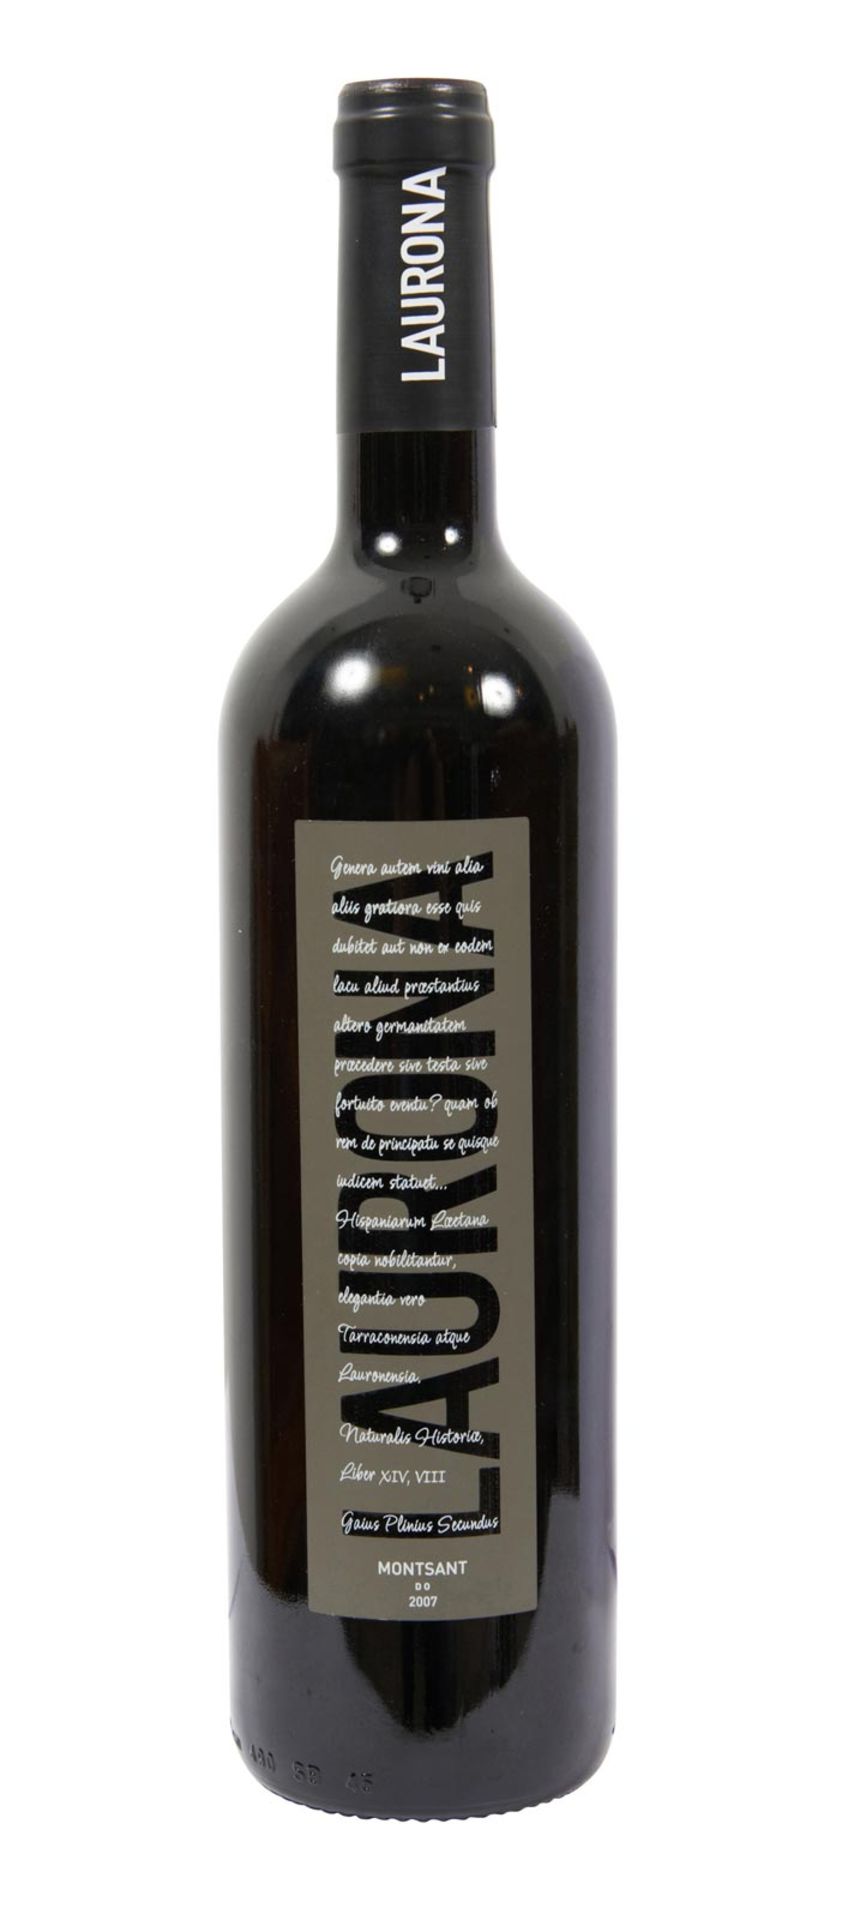 LAURONA. MONSANT 2007 Seis botellas de vino tinto, cinco variedades.